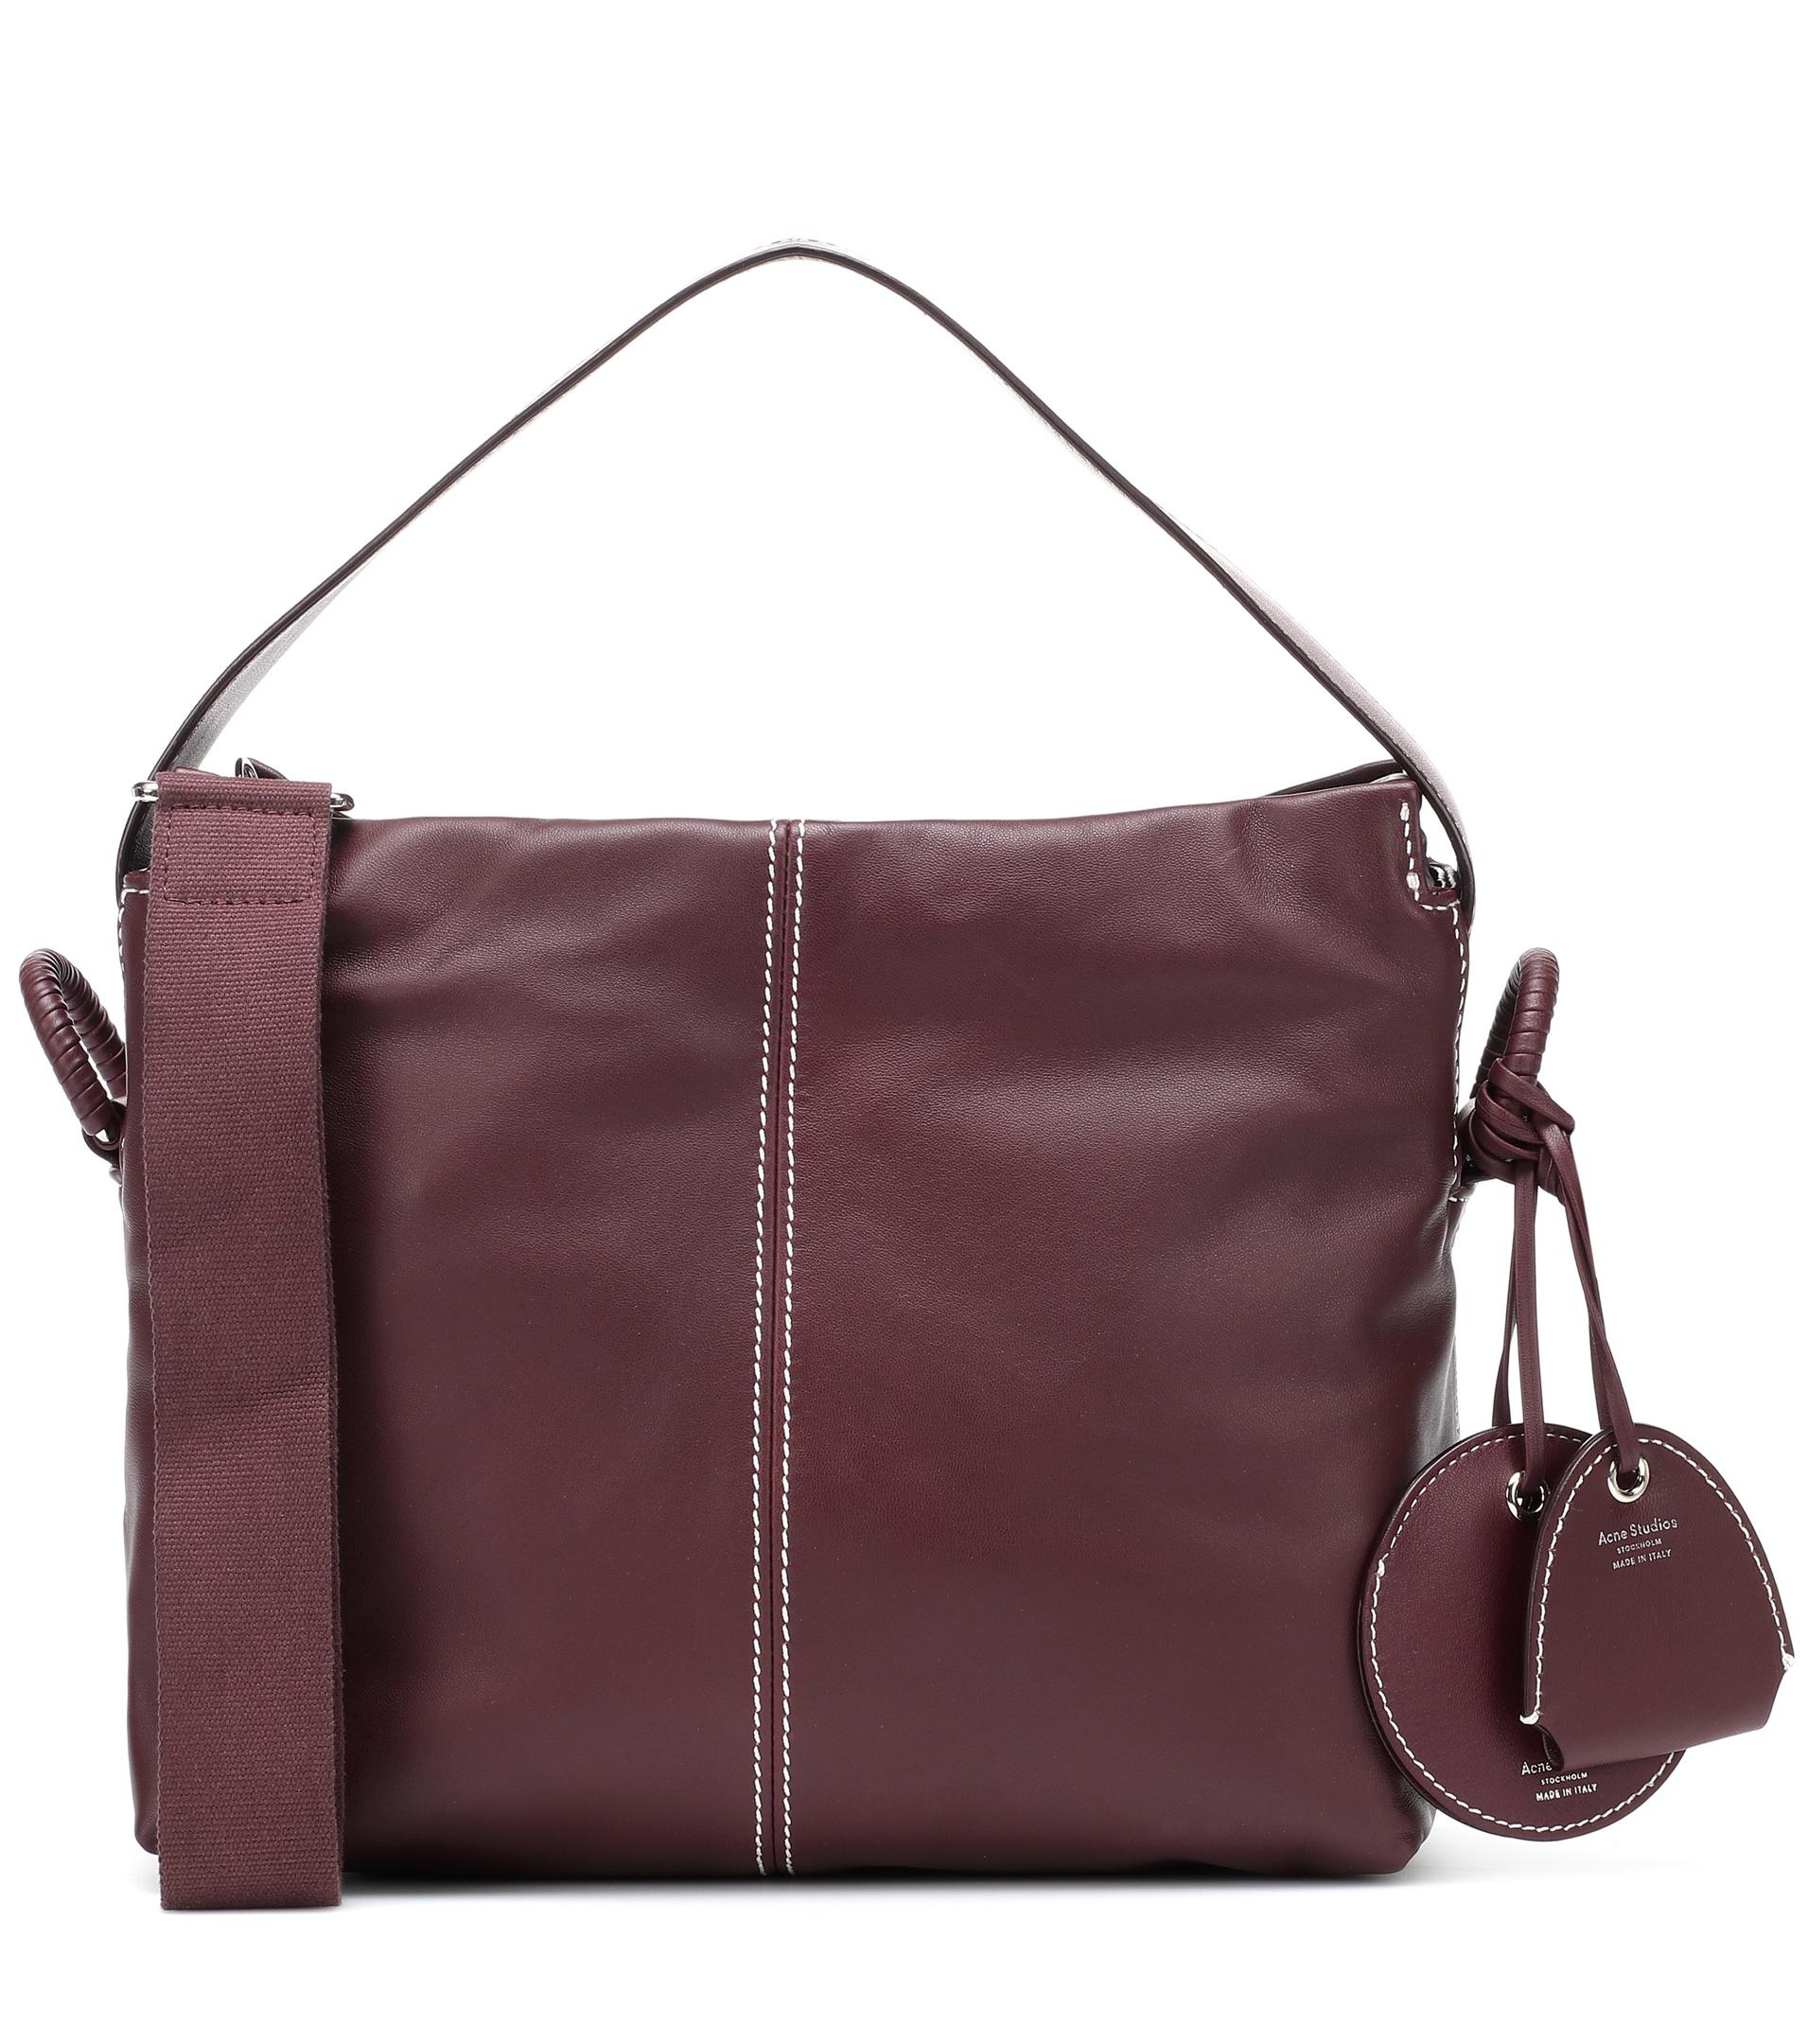 Acne Studios Minimal Leather Handbag in Red - Lyst